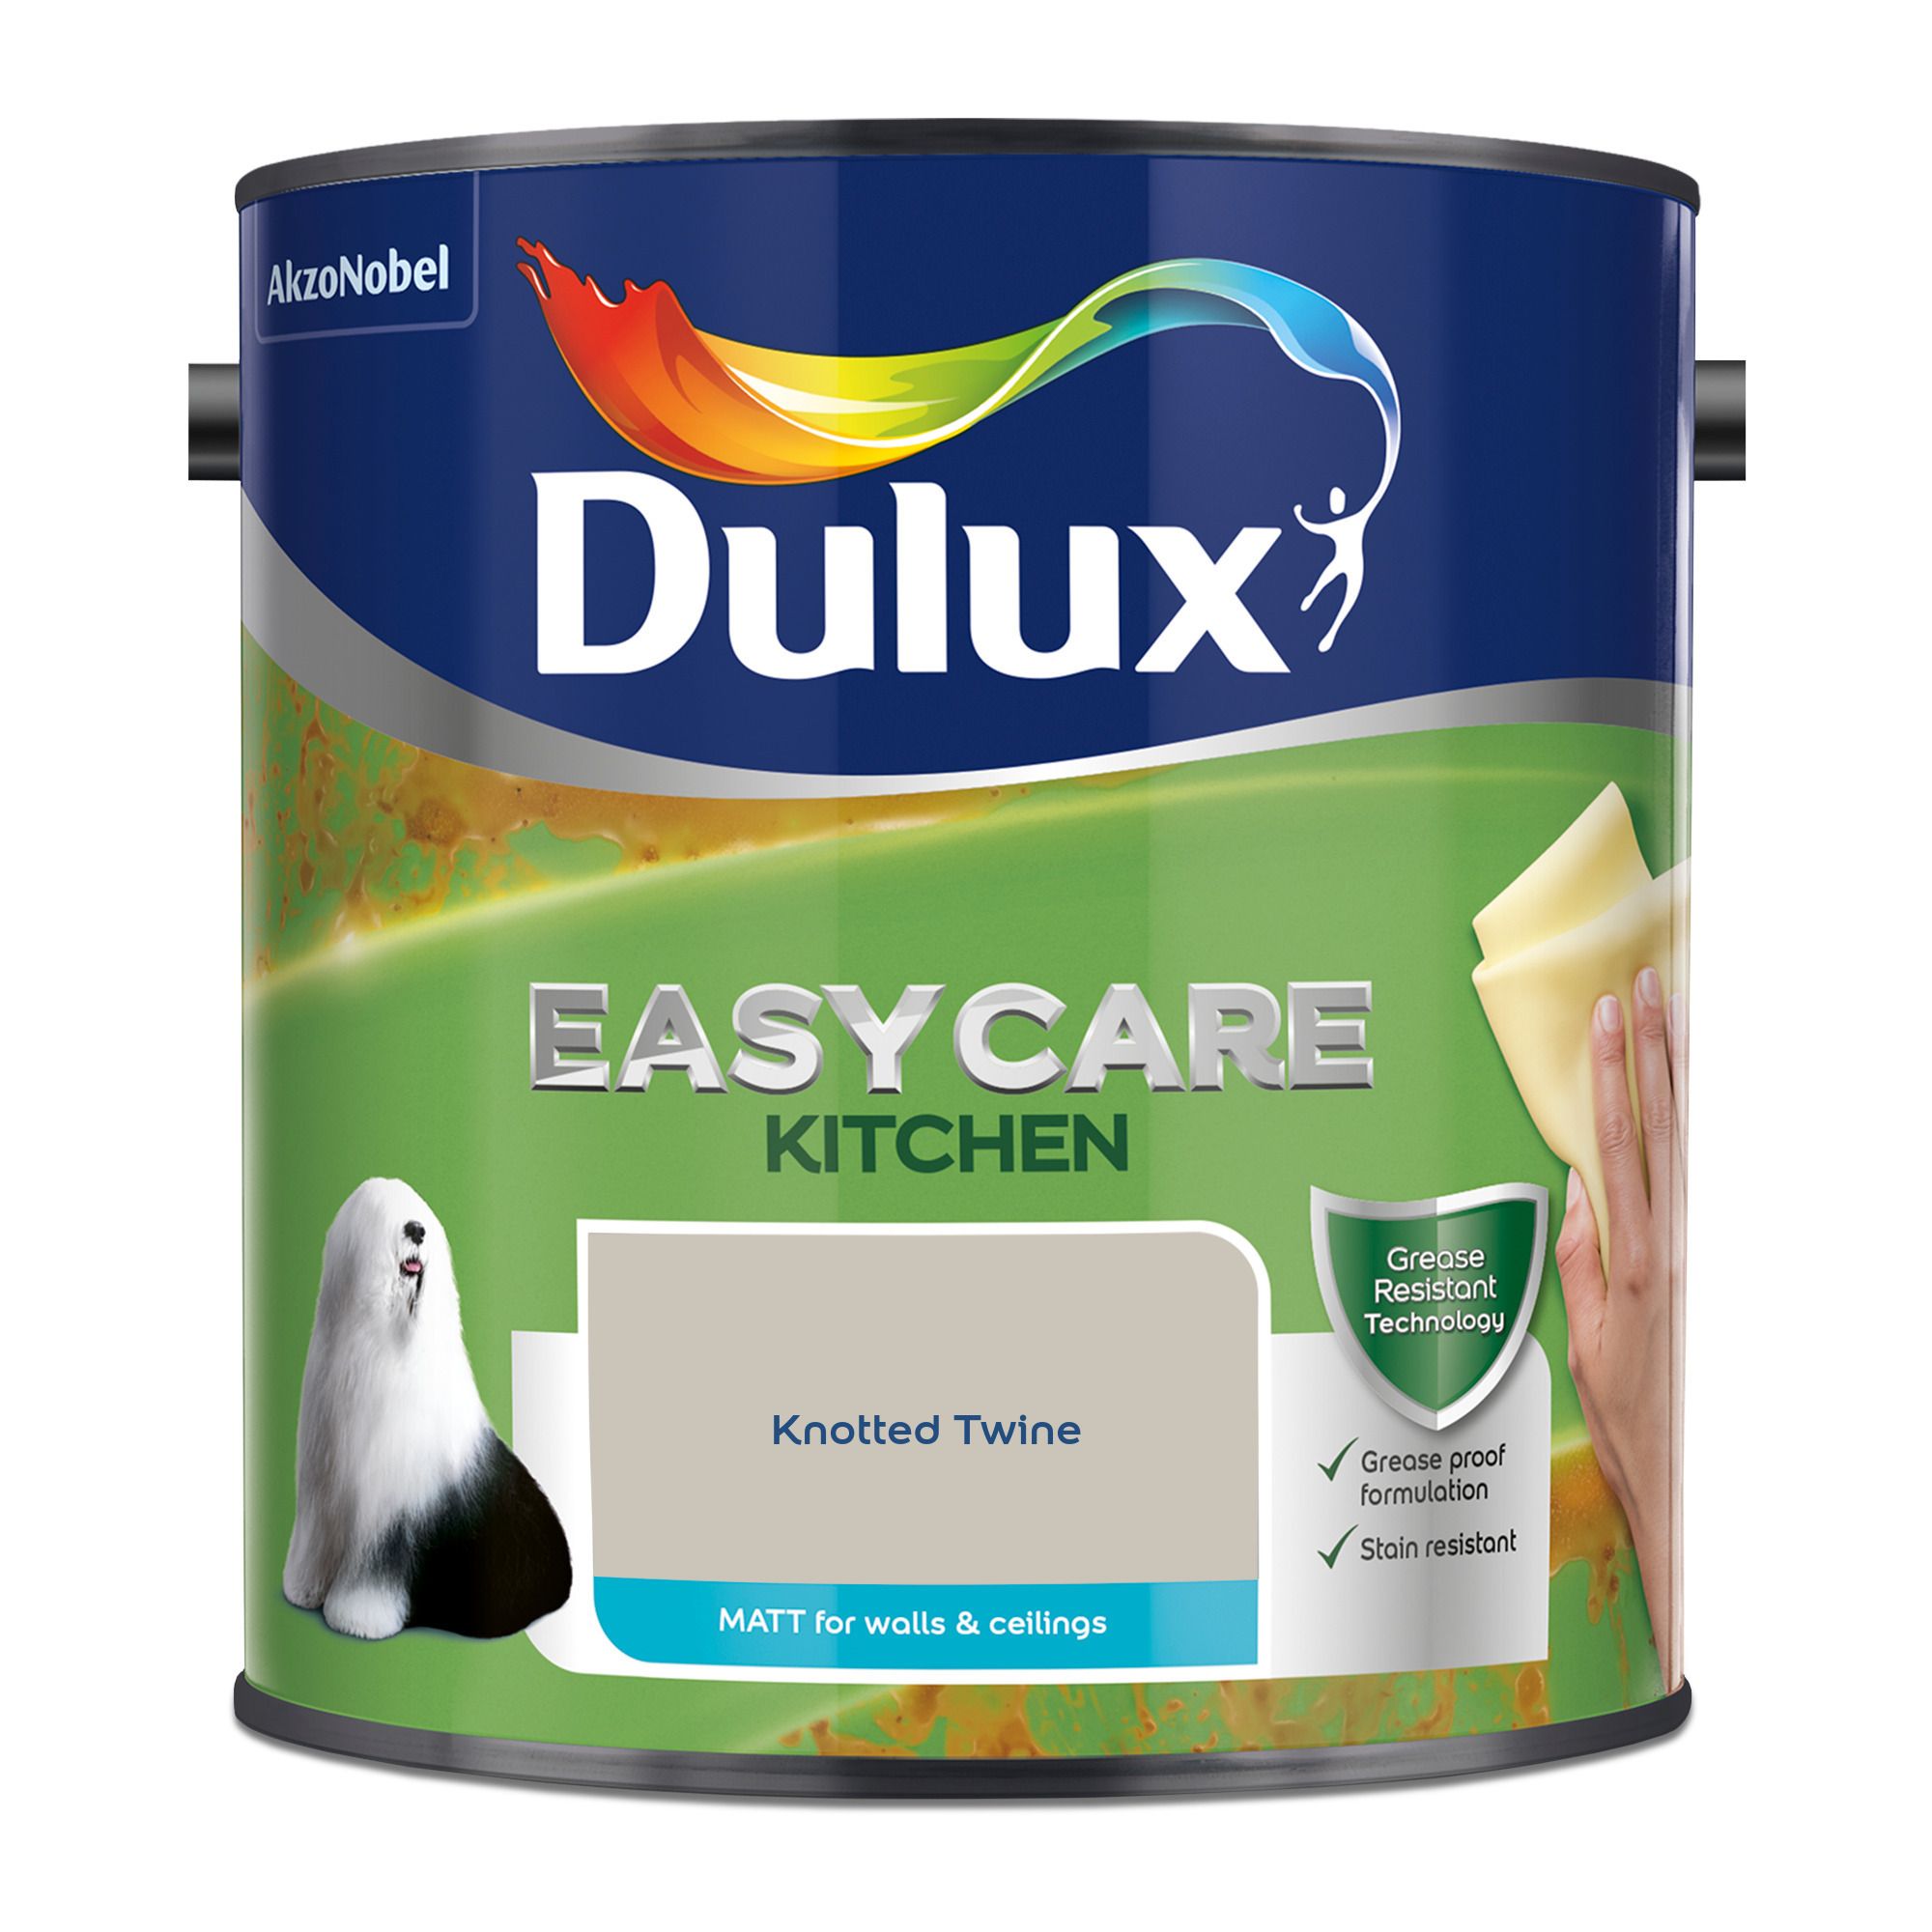 Dulux Easycare Kitchen Knotted Twine Matt Wall paint, 2.5L